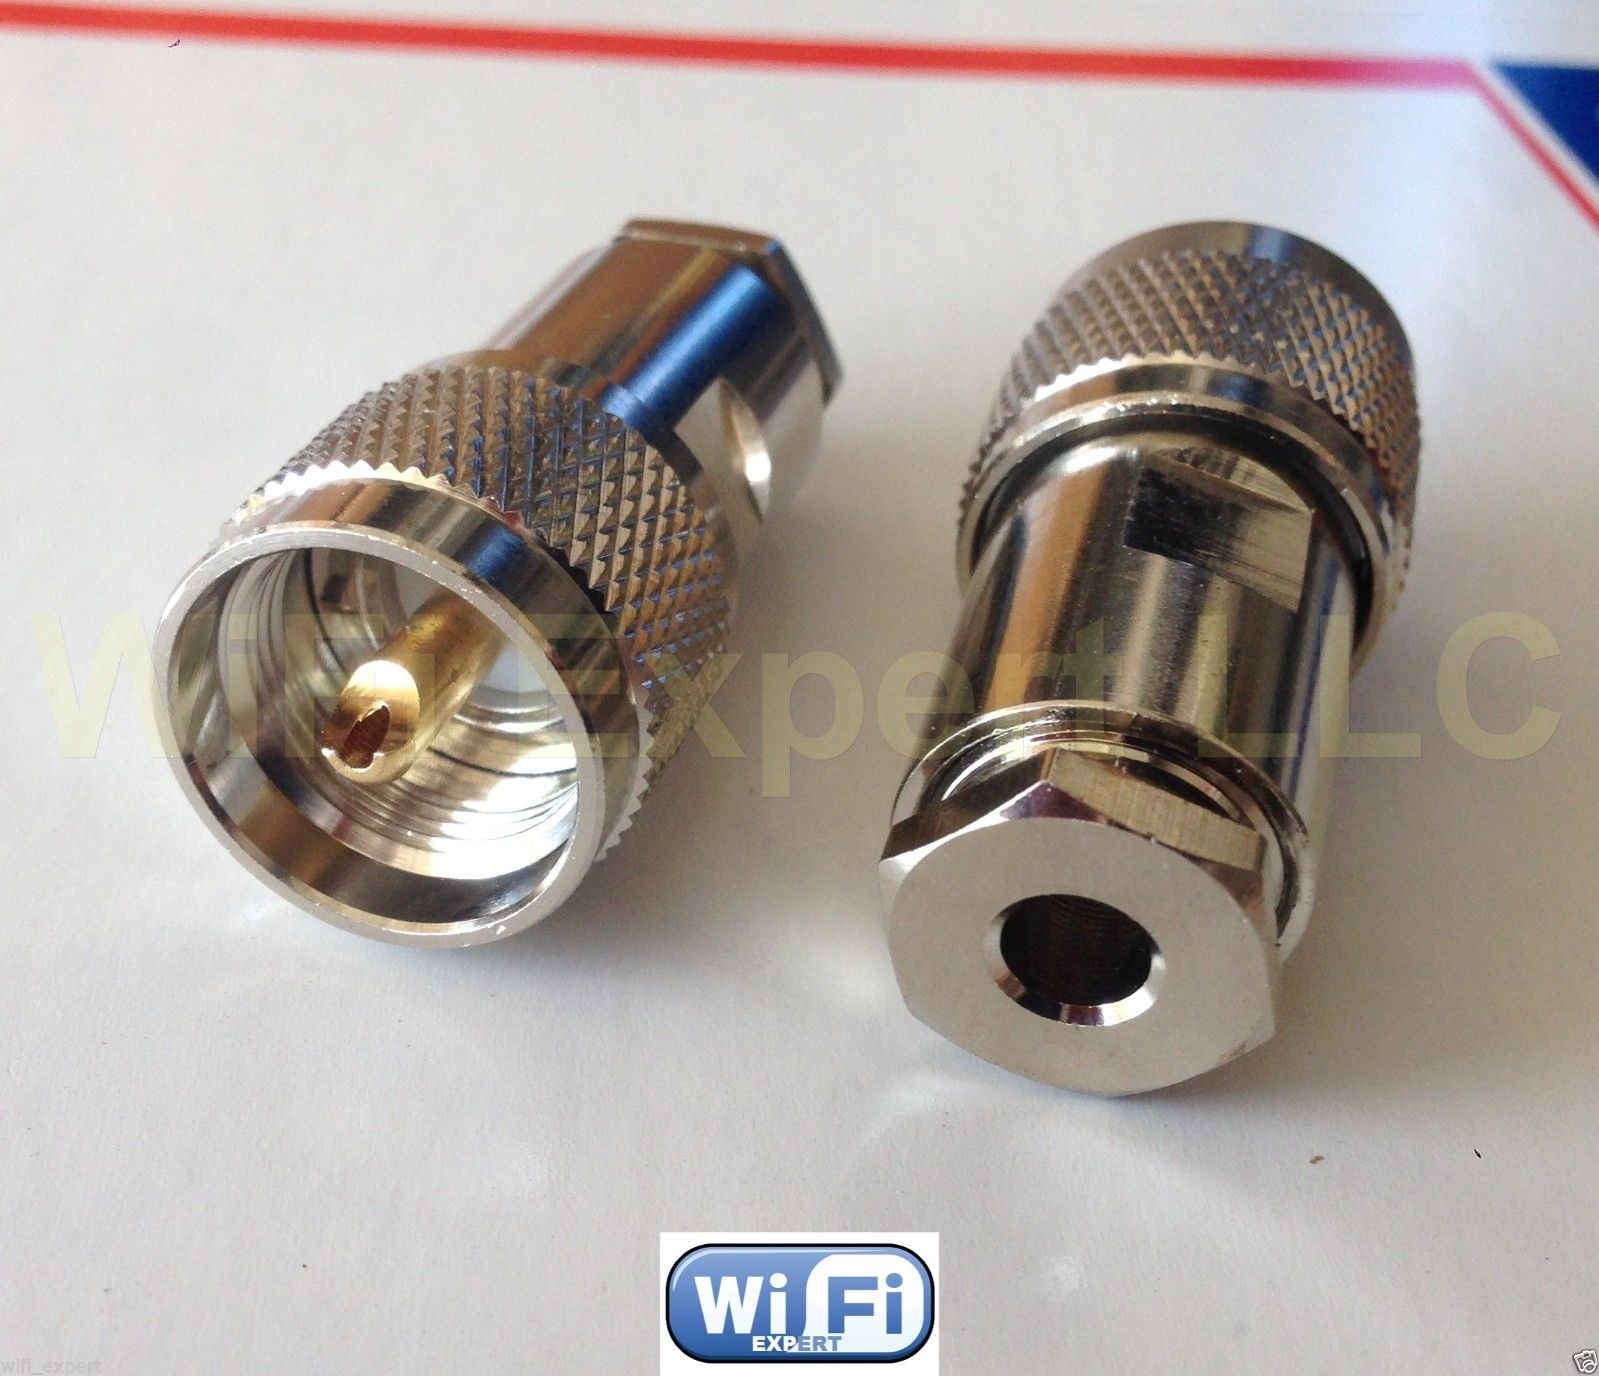 Details about   10pcs Connector PL259 UHF male plug pin crimp for RG58 RG142 LMR195 RG400